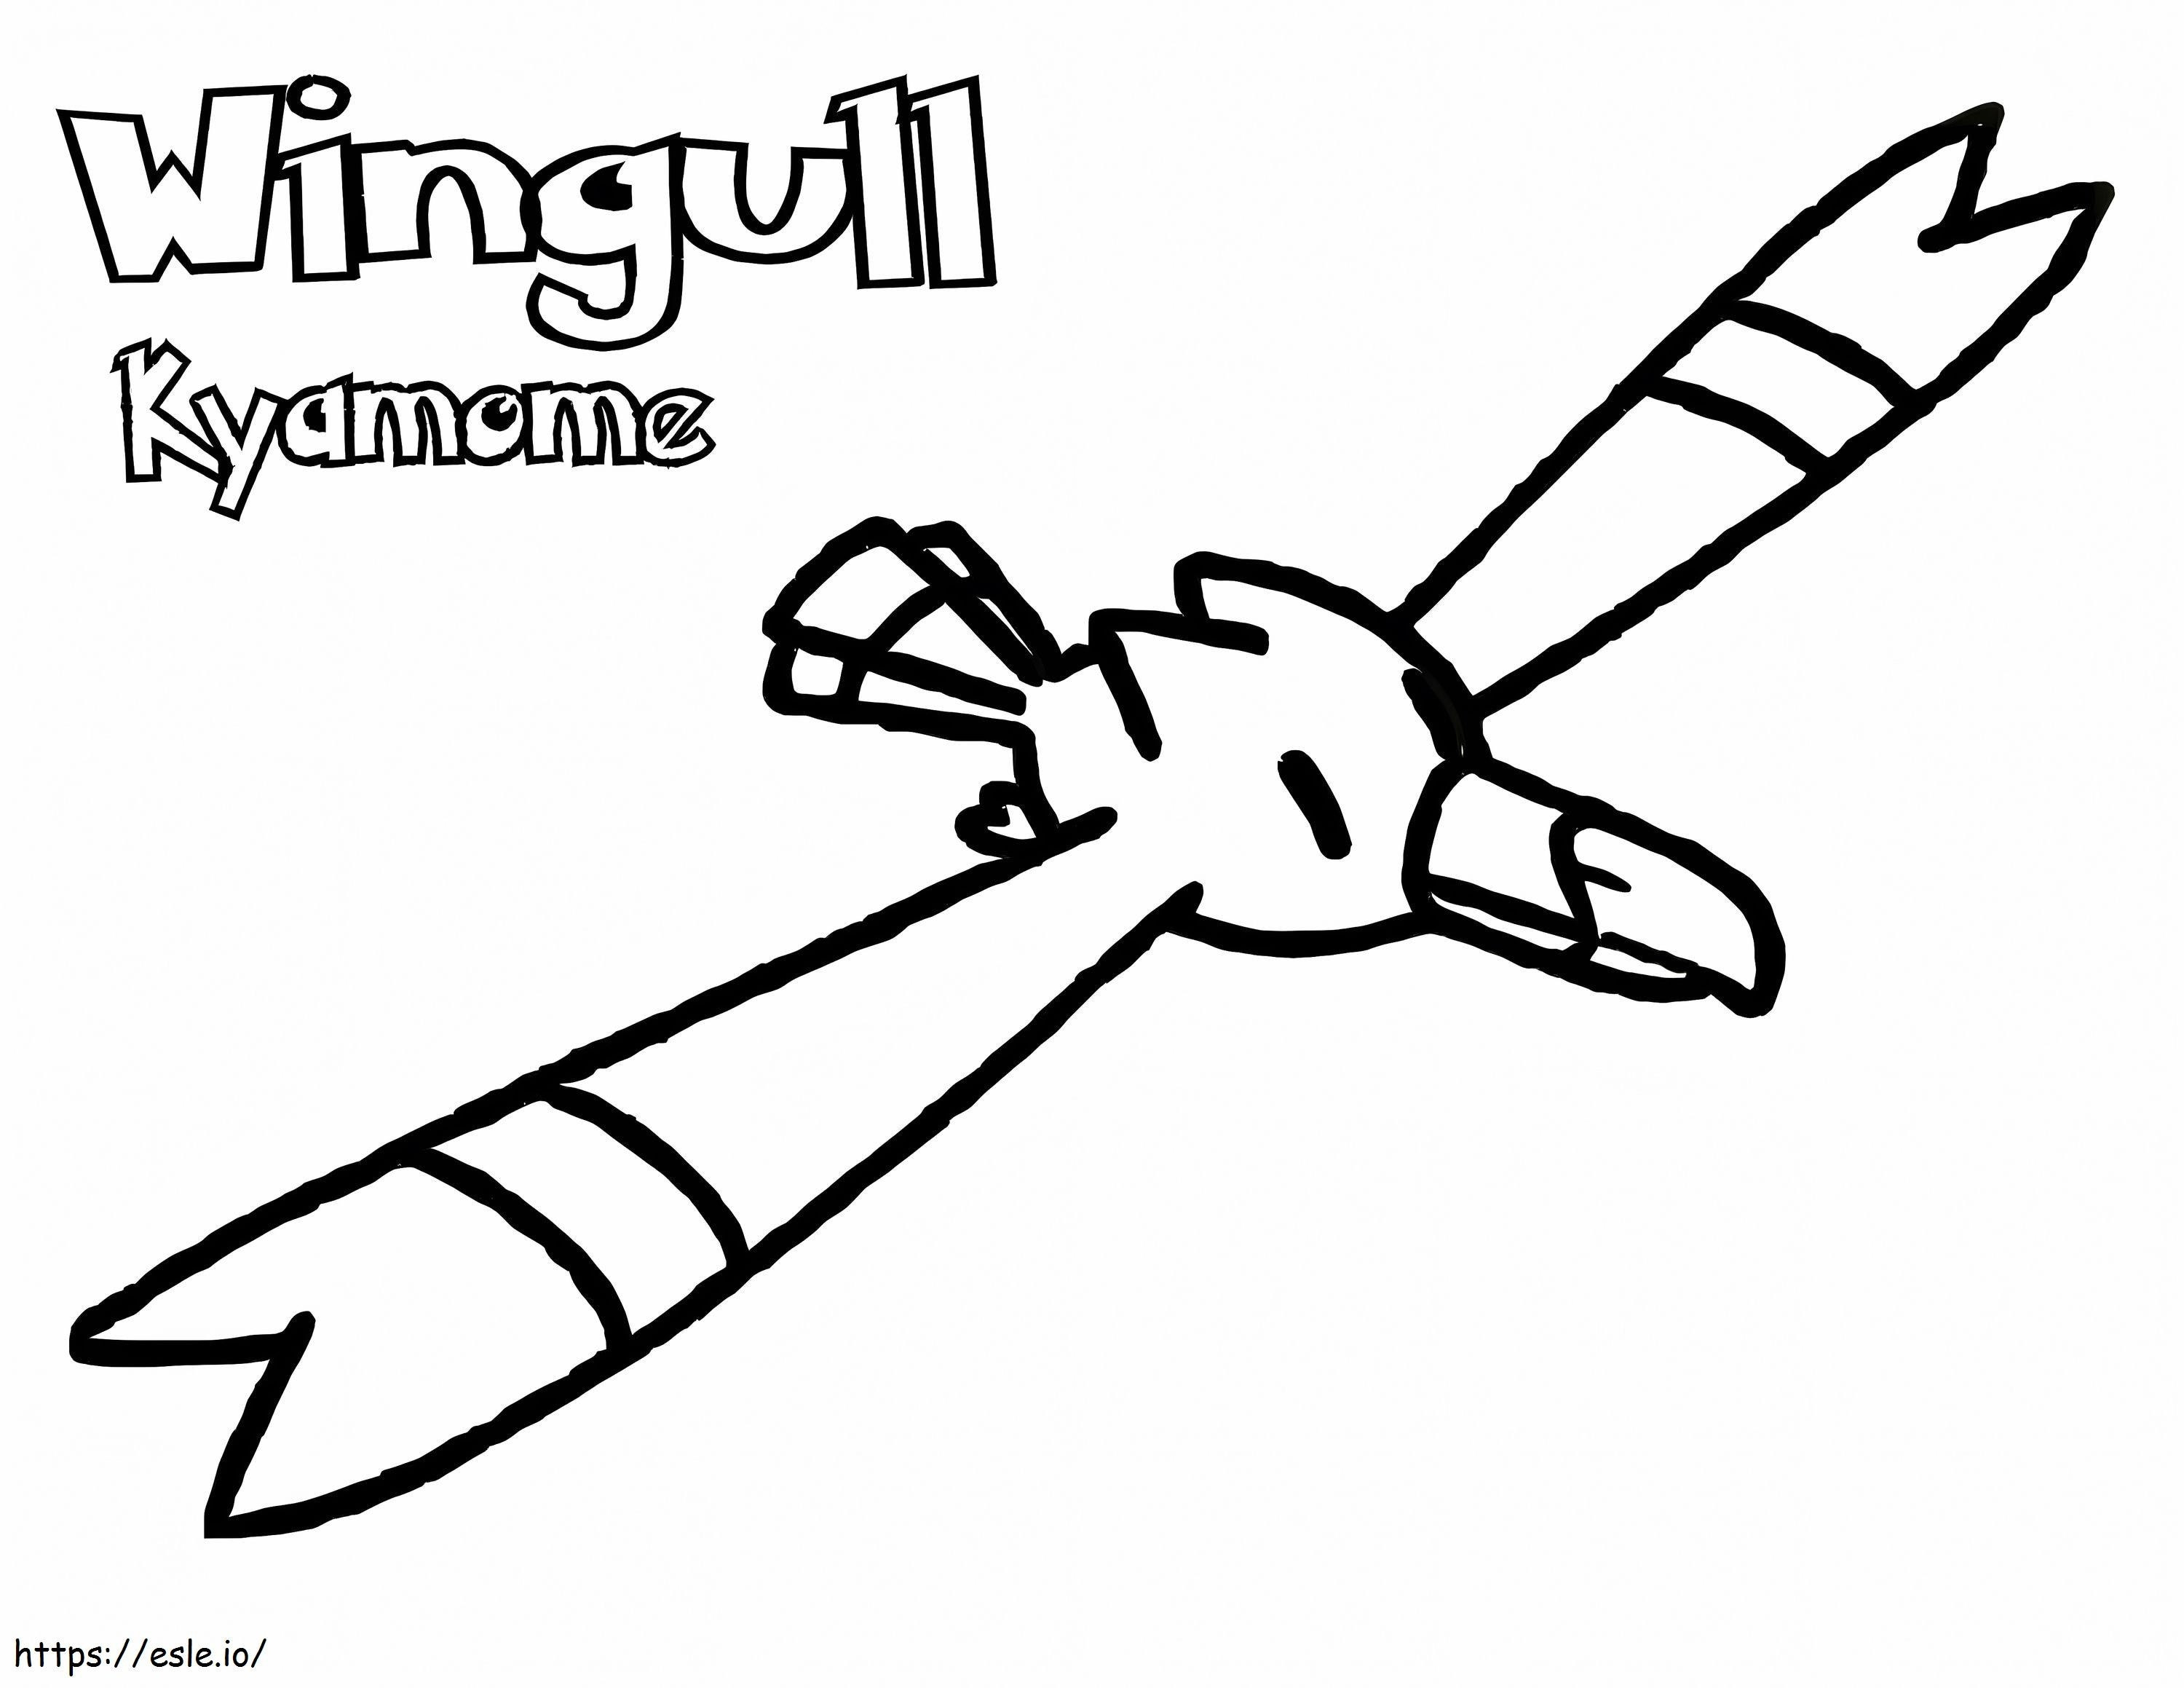 Pokémon Wingull para impressão para colorir